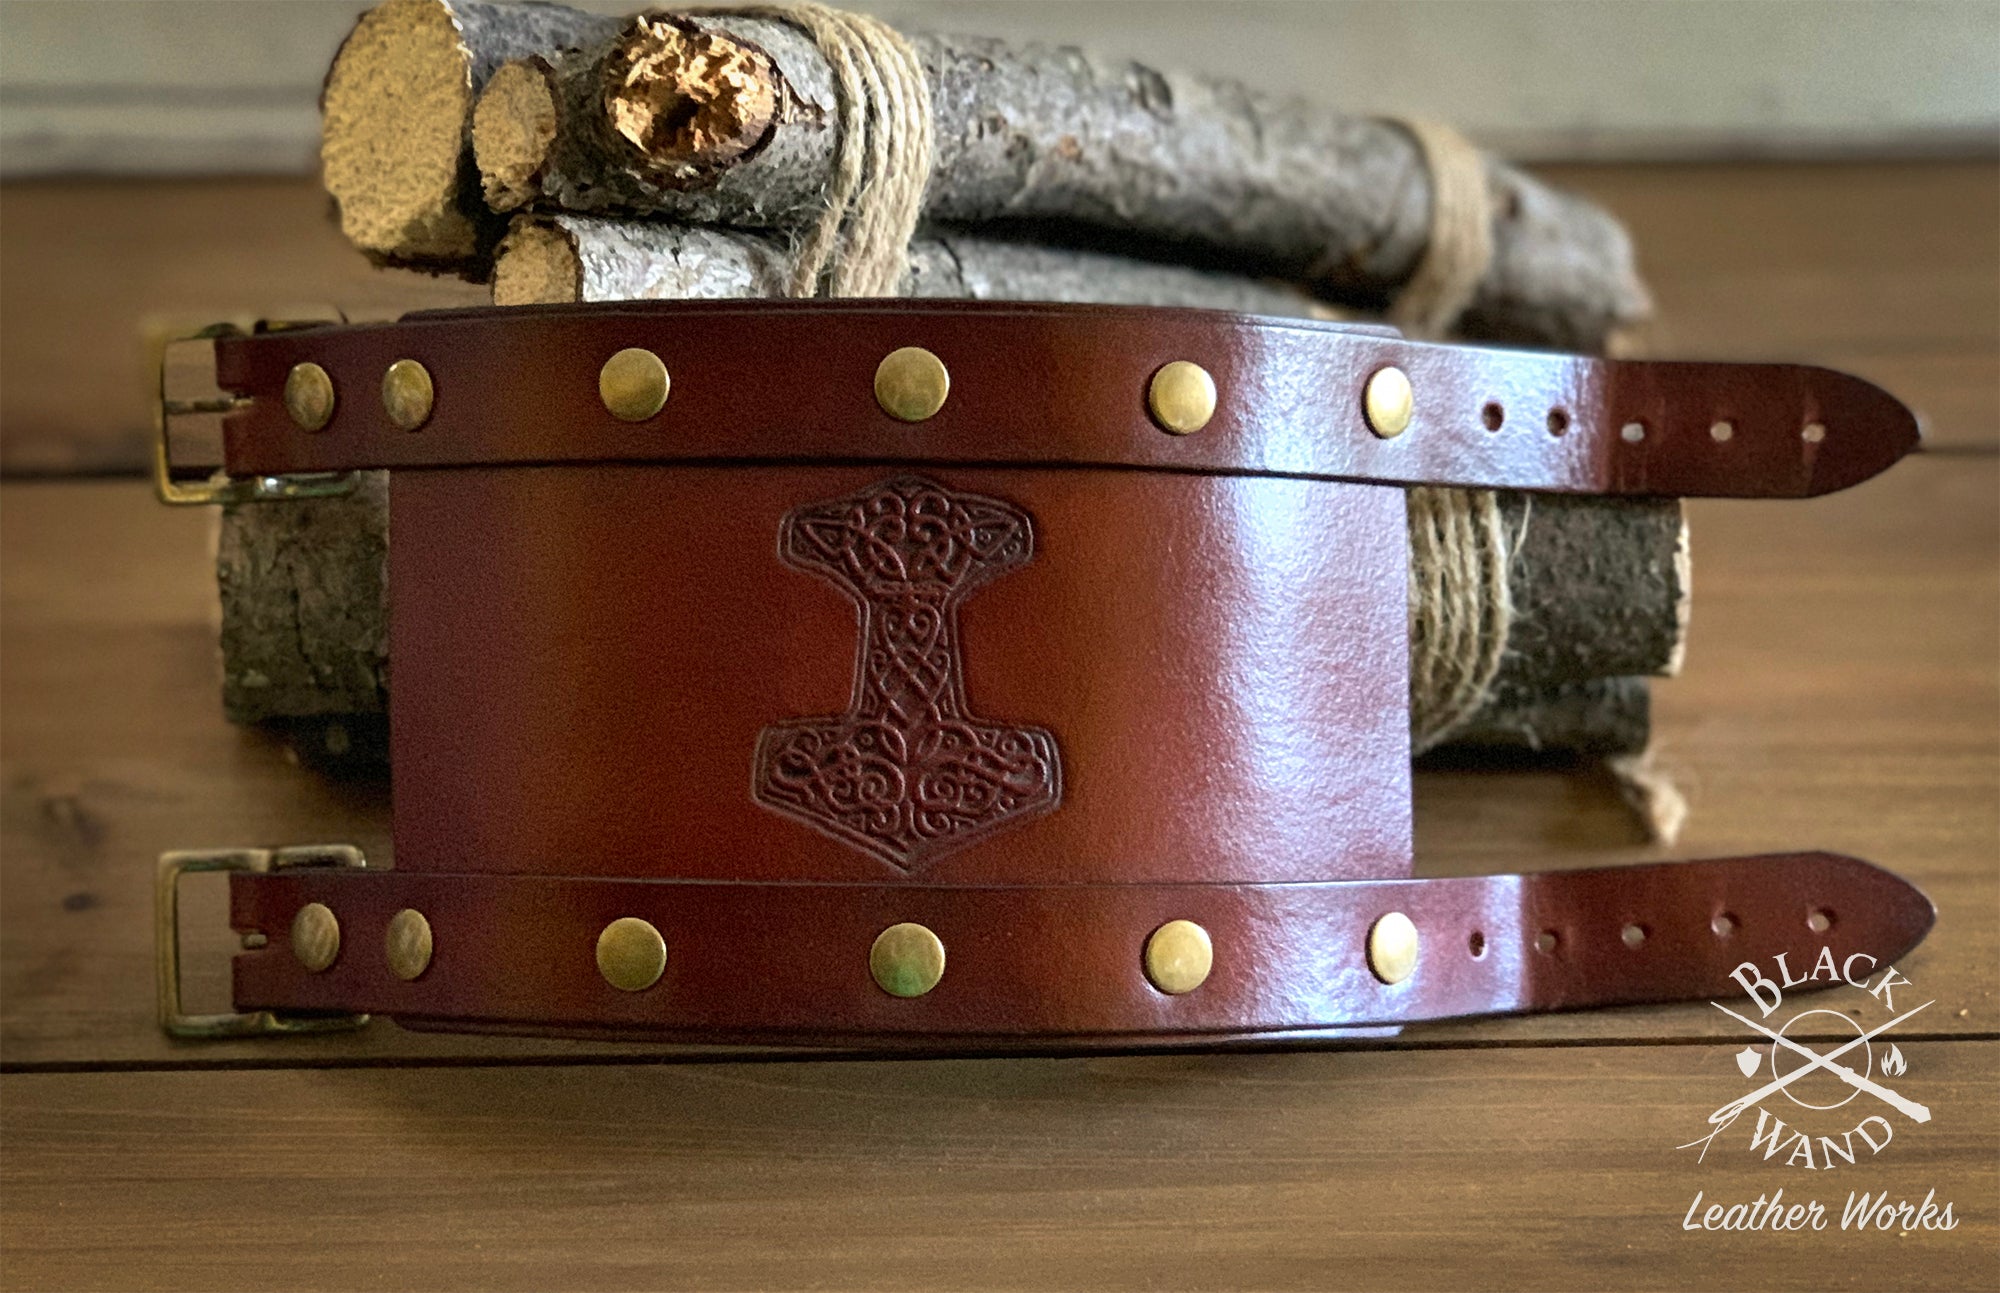 Viking Warrior Leather Wrist Cuff – Black Wand Leather Works